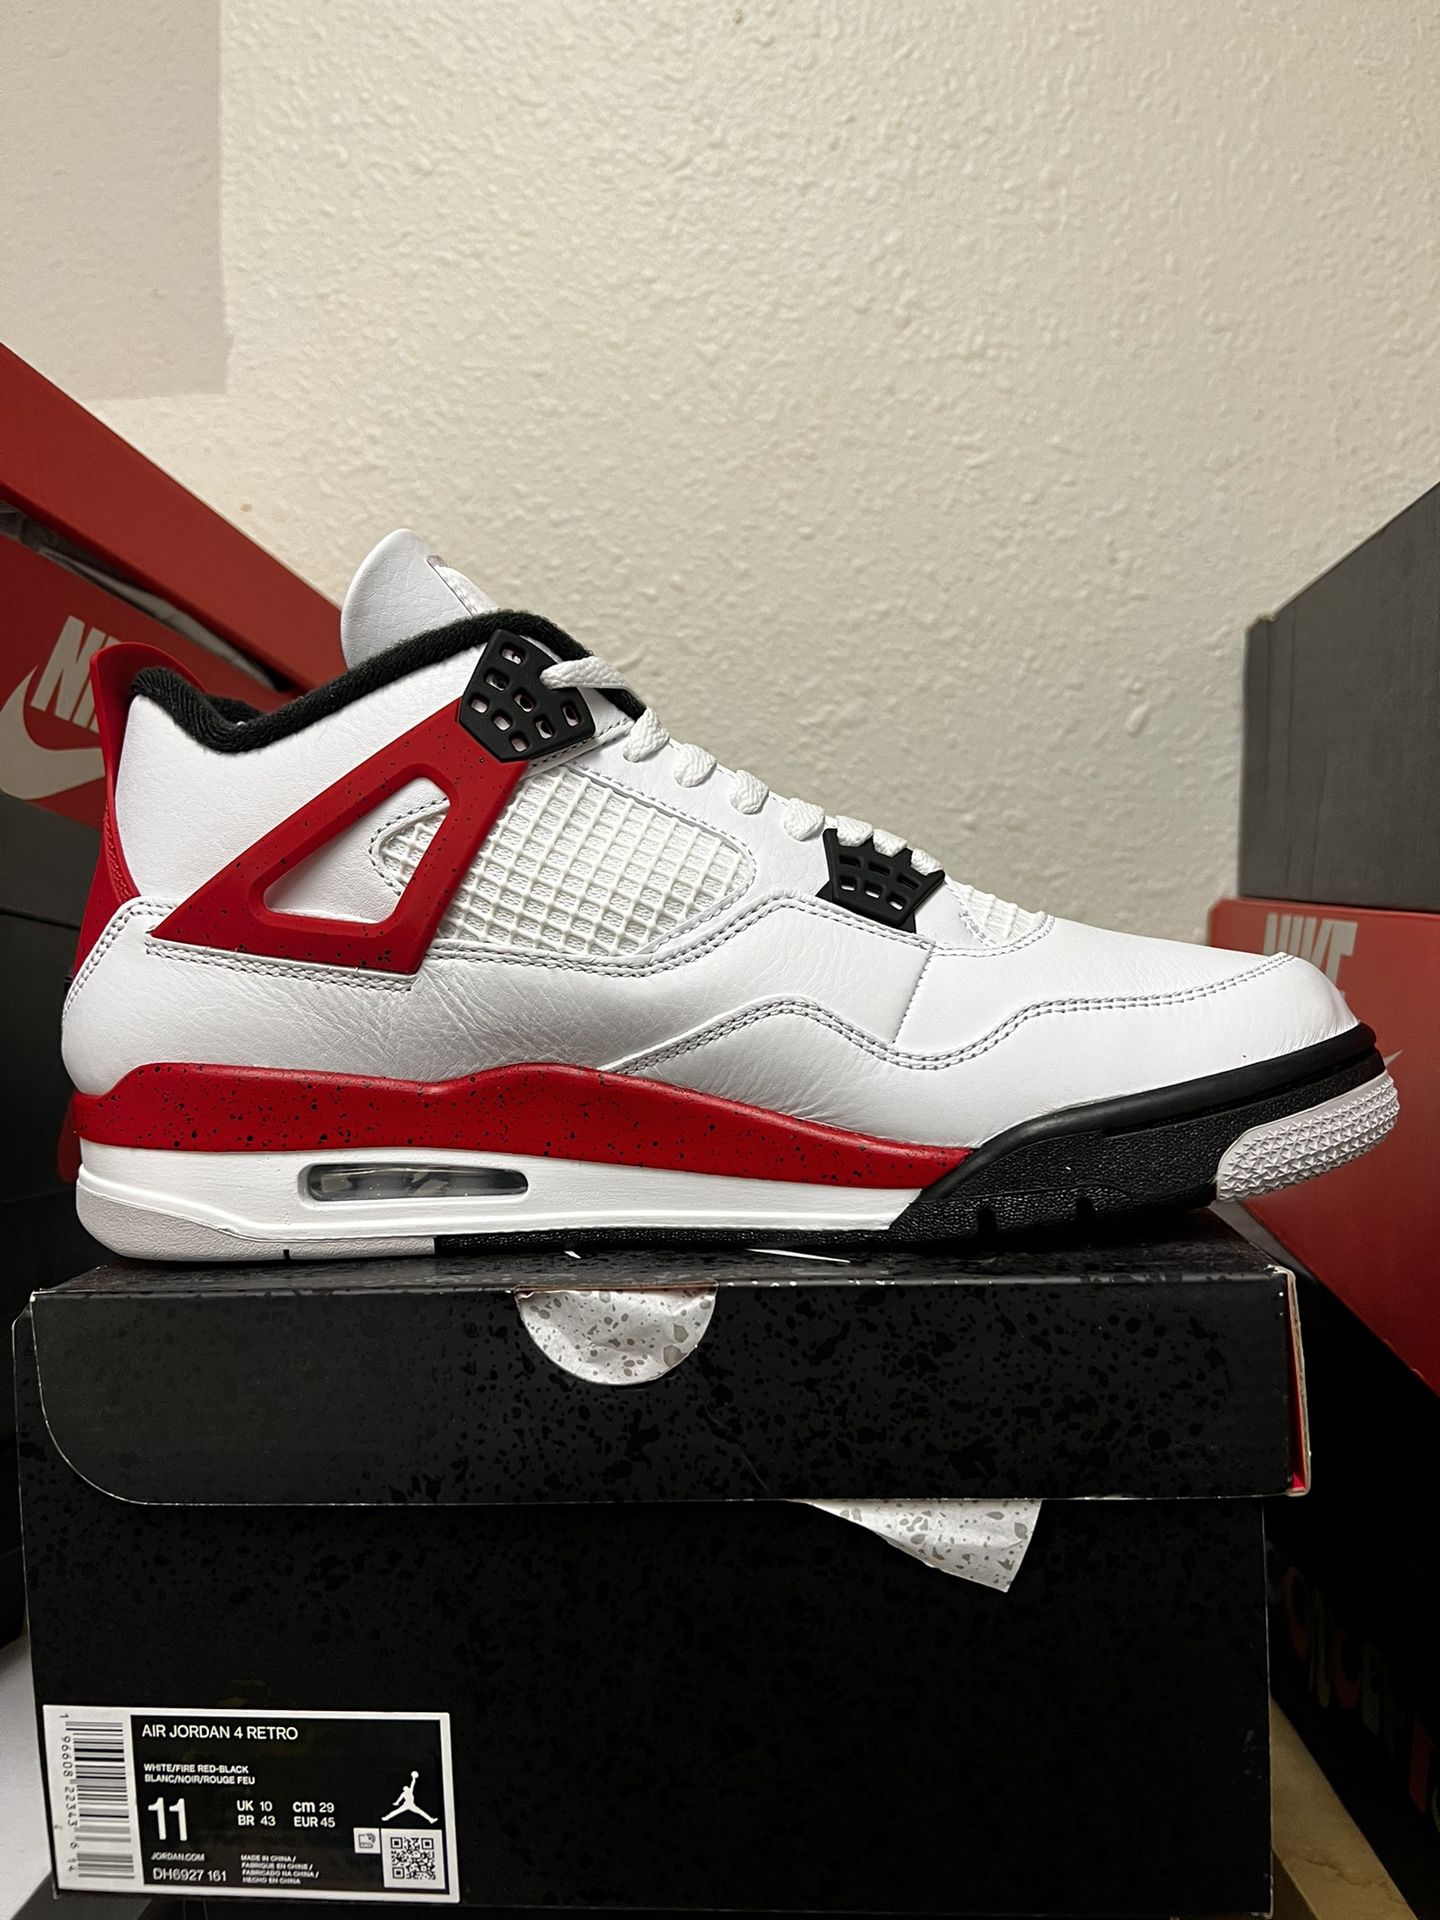 Nike Air Jordan 4 Retro White/Fire Red-Black Size 11 